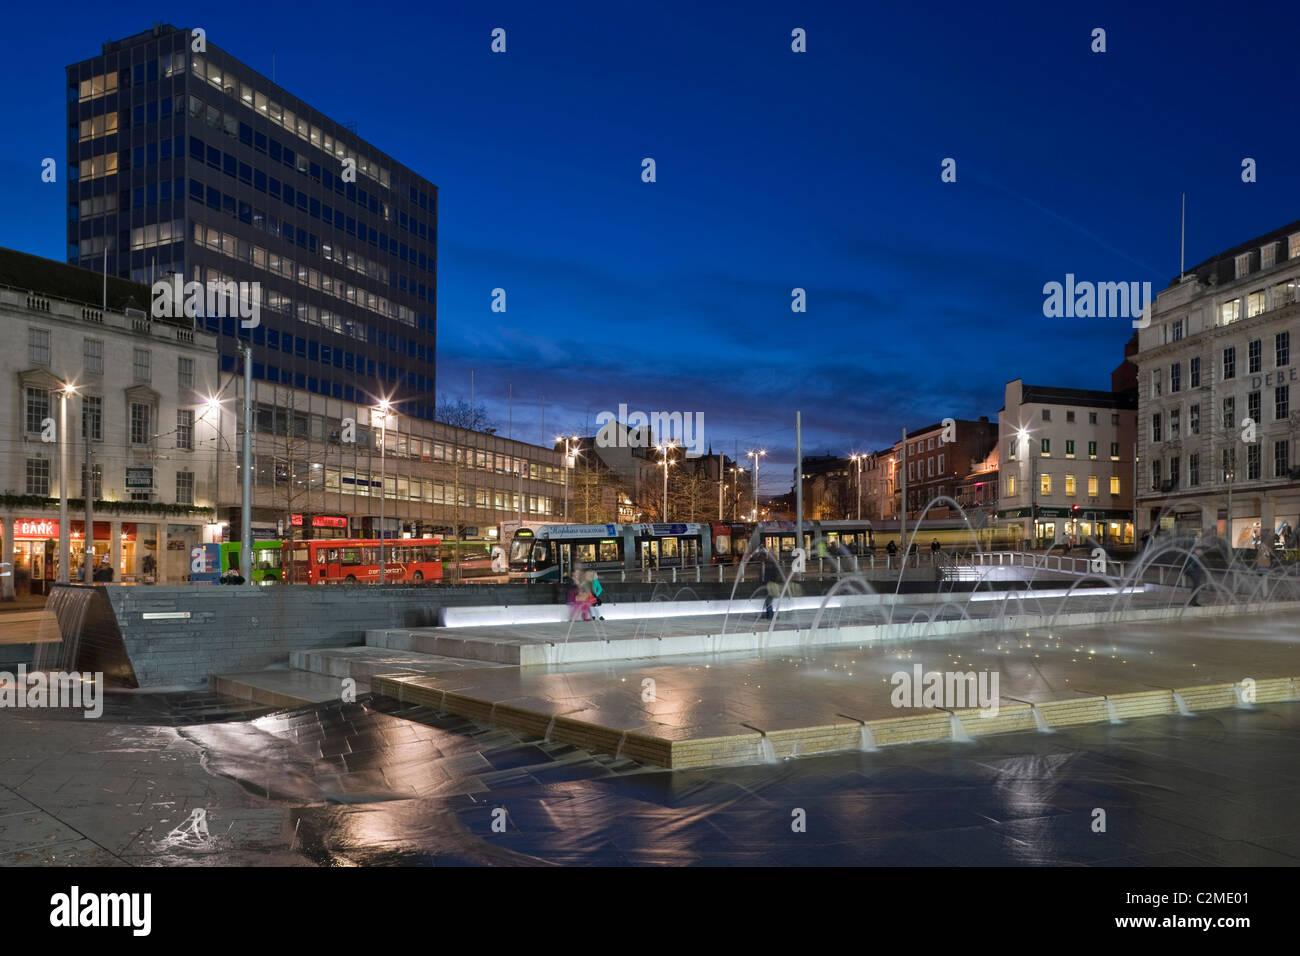 Old Market Square, Nottingham, England. RIBA Award winning redevelopment. Stock Photo